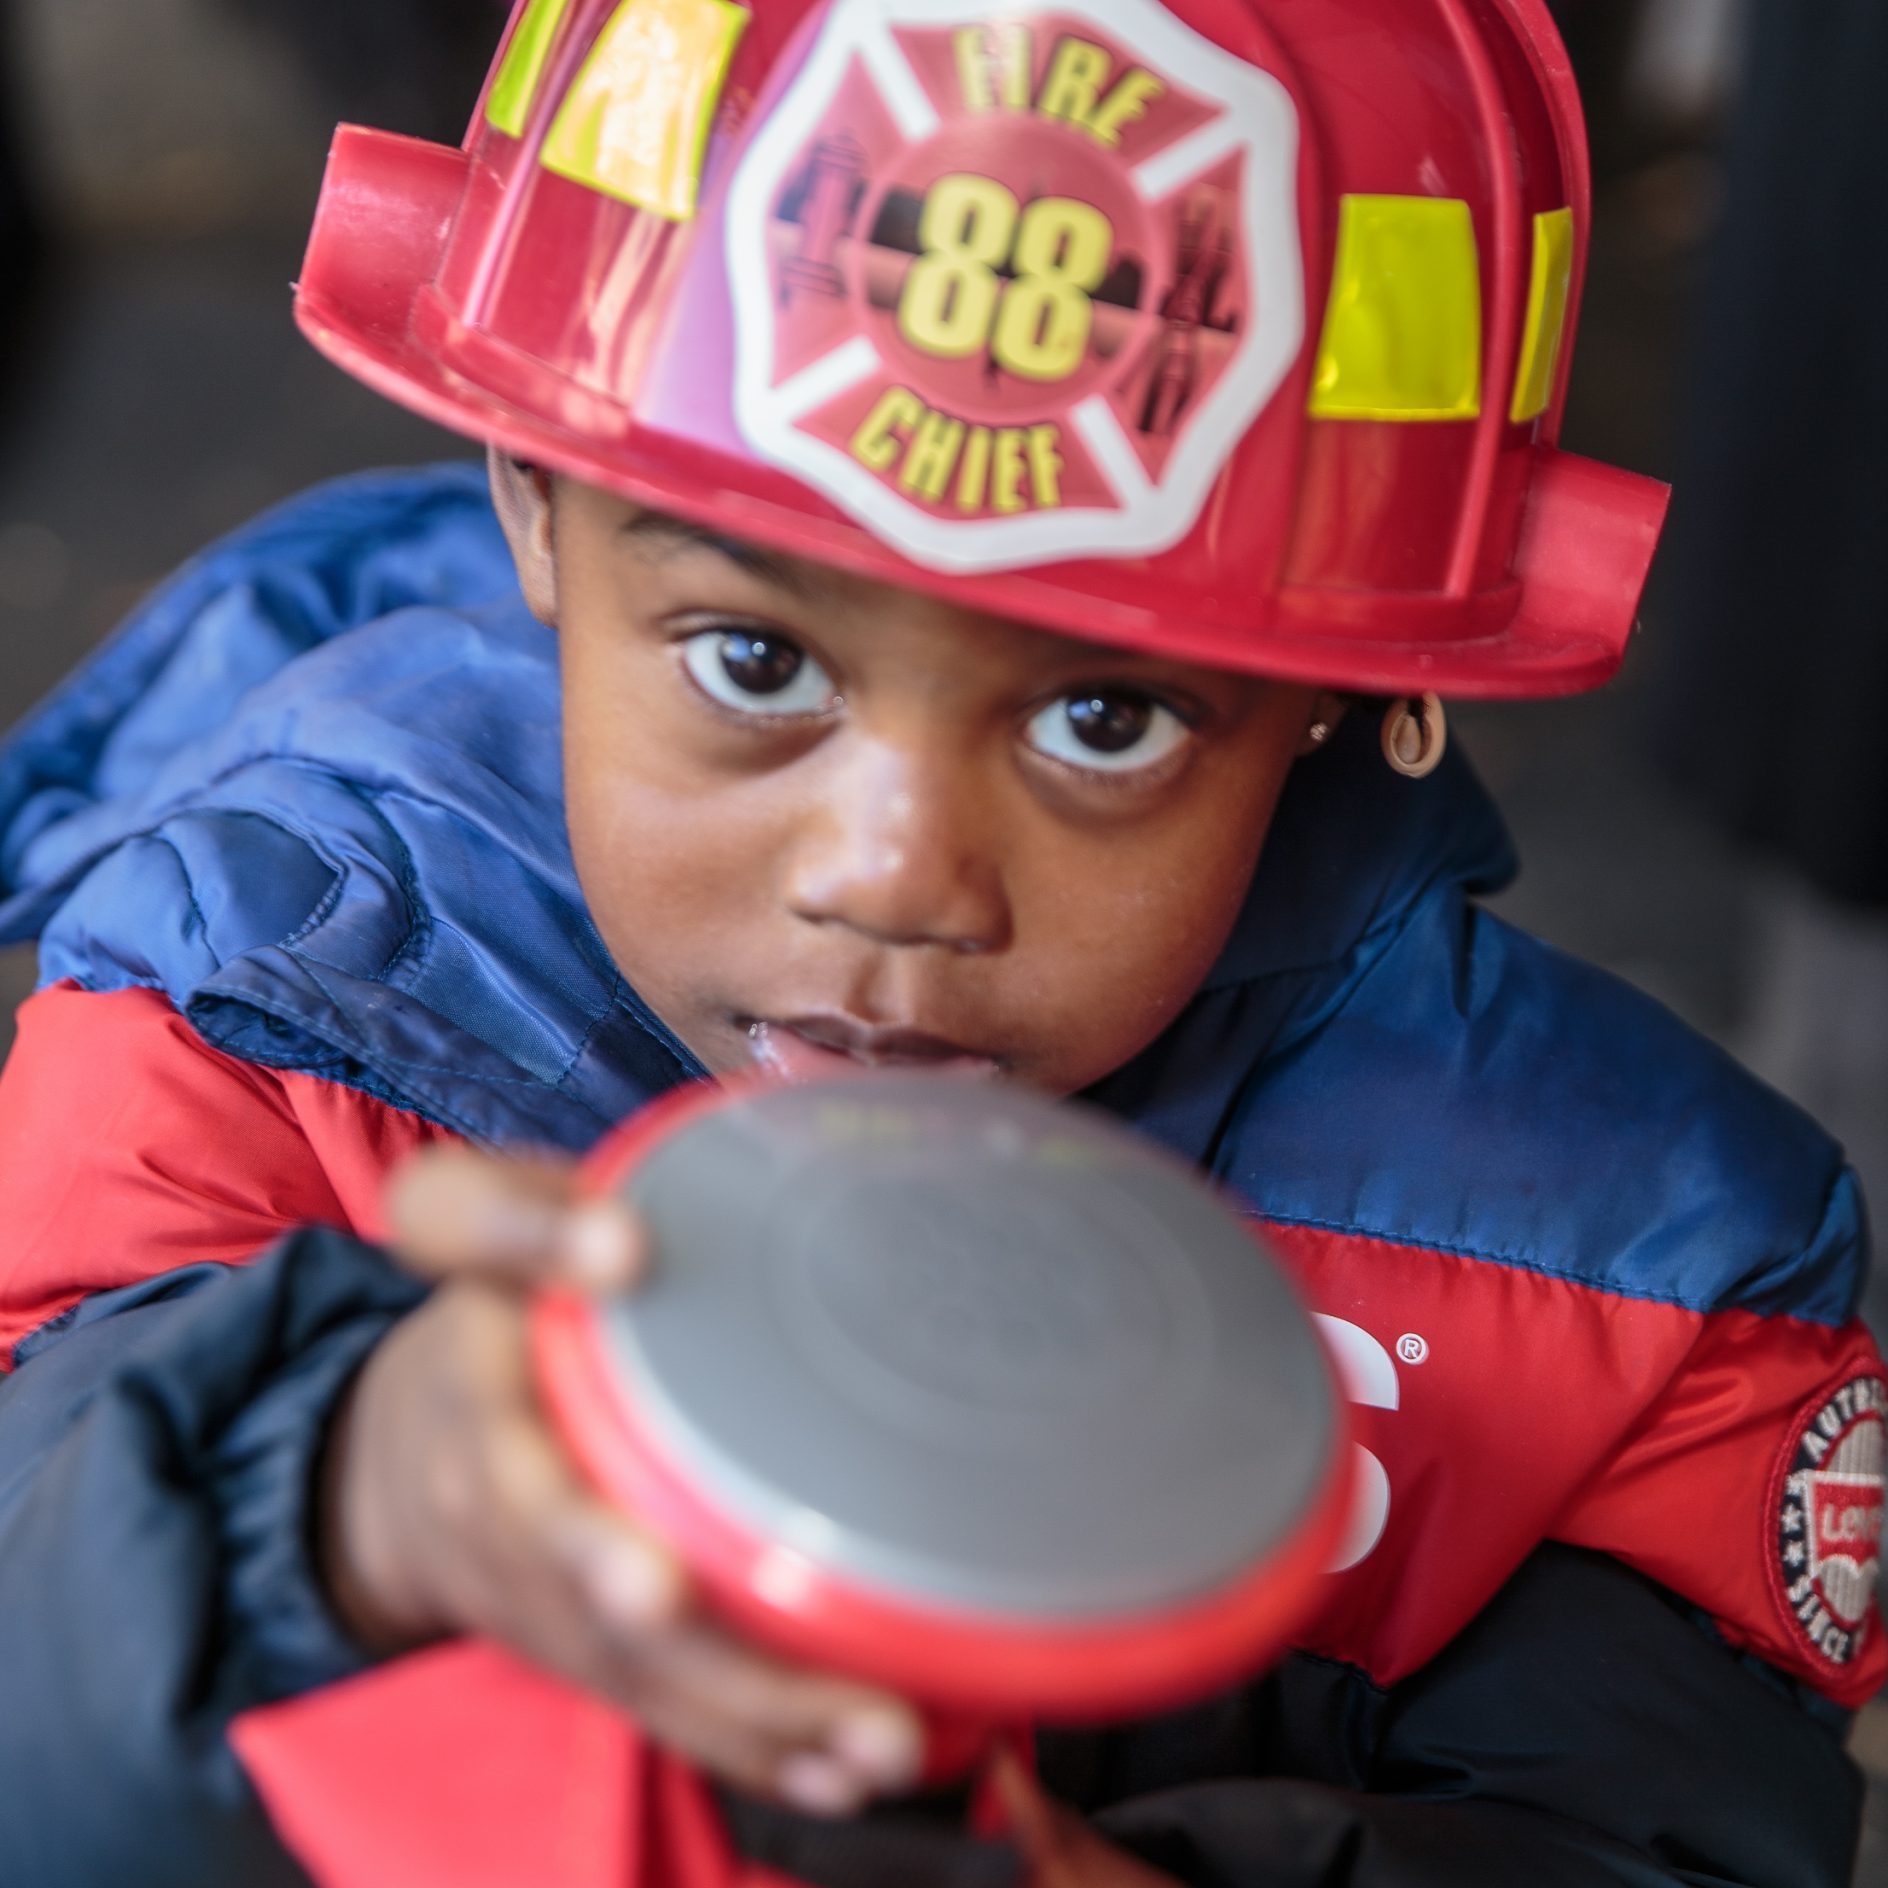 Child in fireman costume